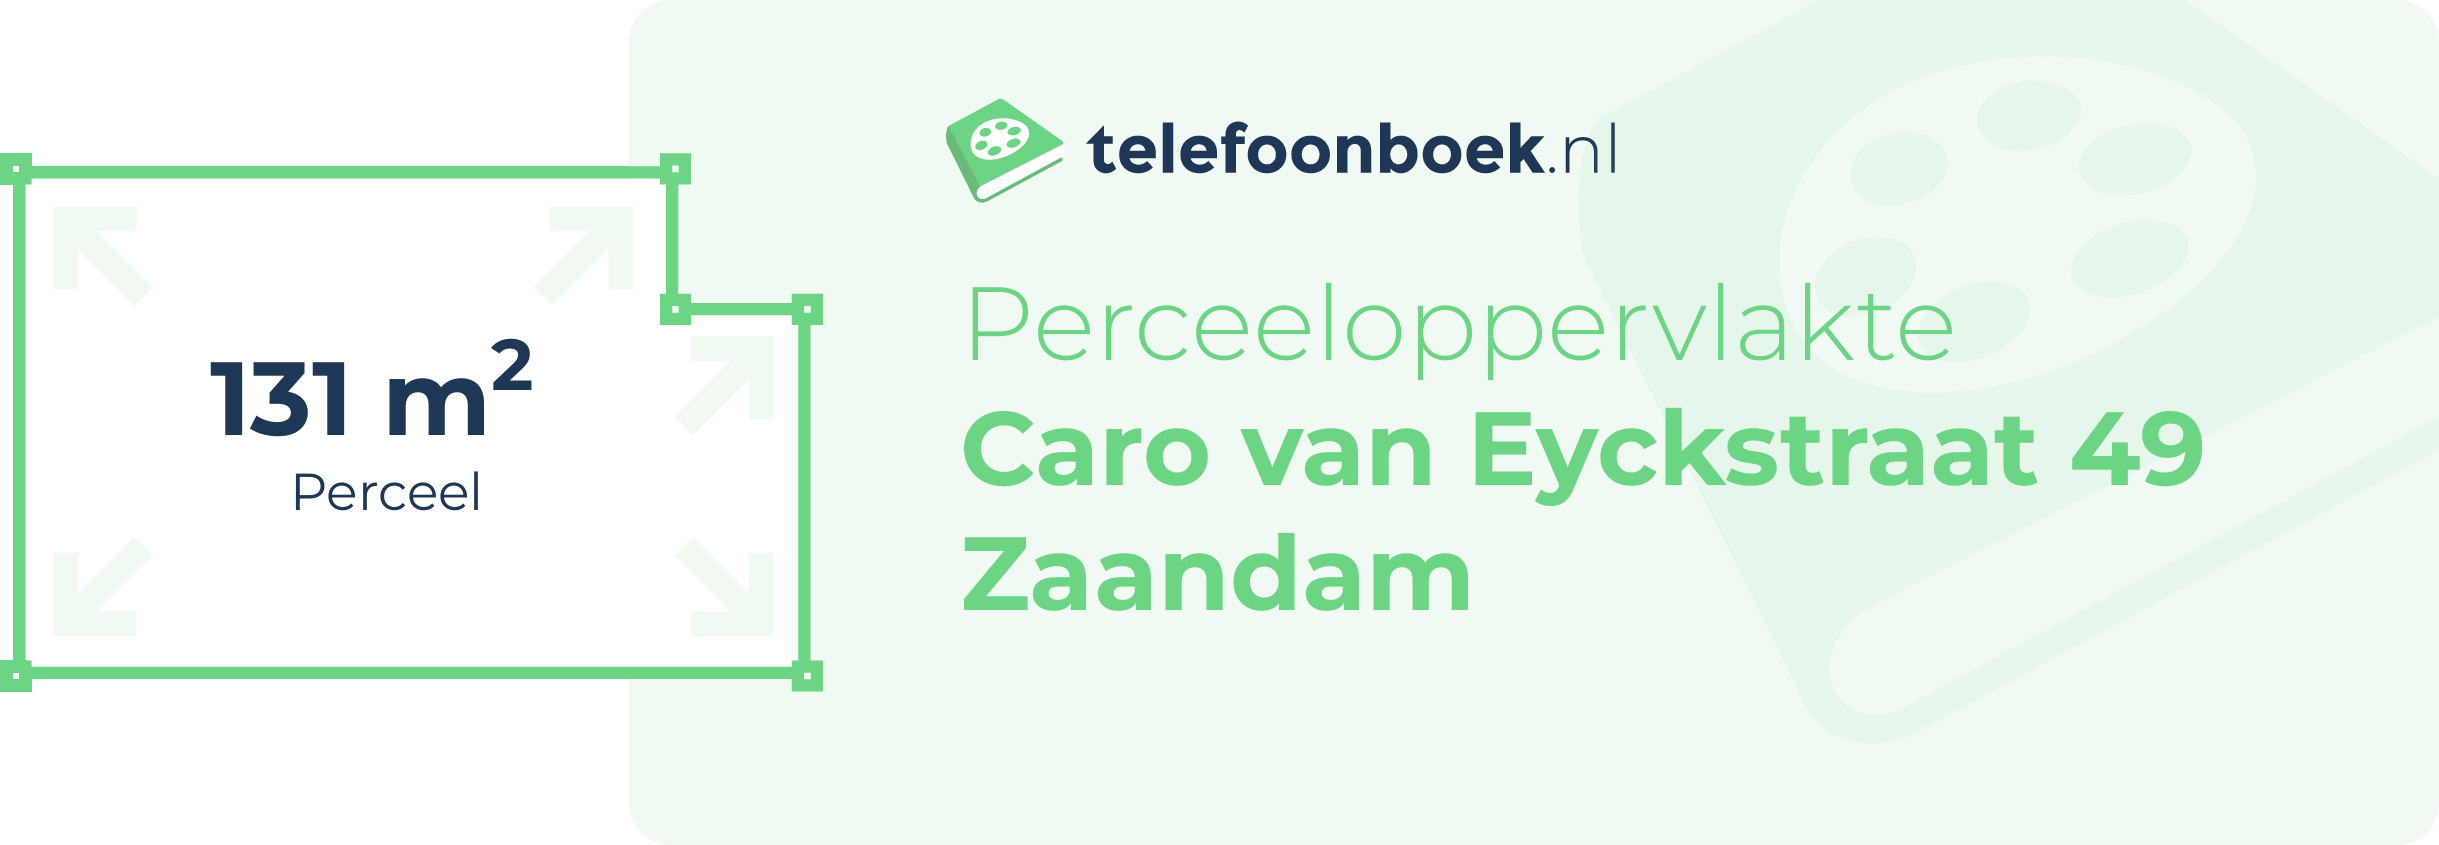 Perceeloppervlakte Caro Van Eyckstraat 49 Zaandam